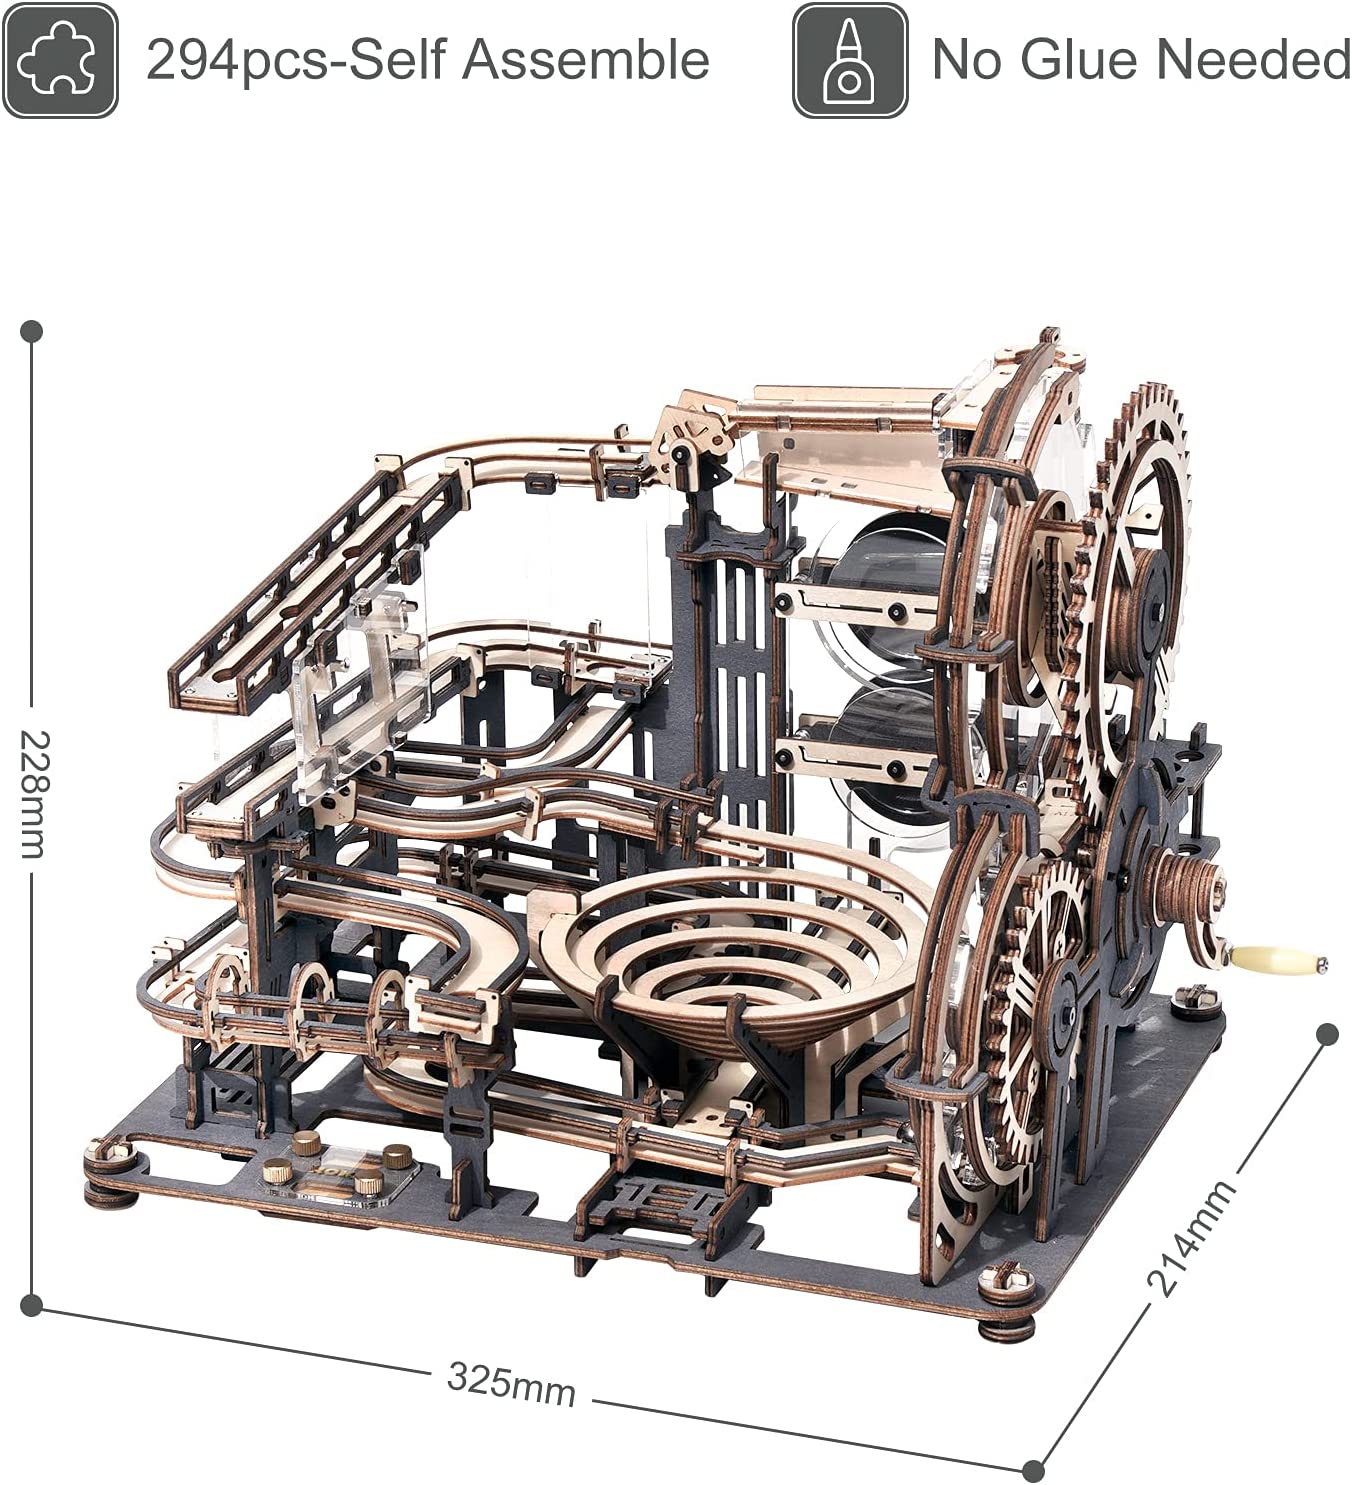 ROKR Marble Night City 3D Wooden Puzzle Waterwheel Model Kit - ToylandEU